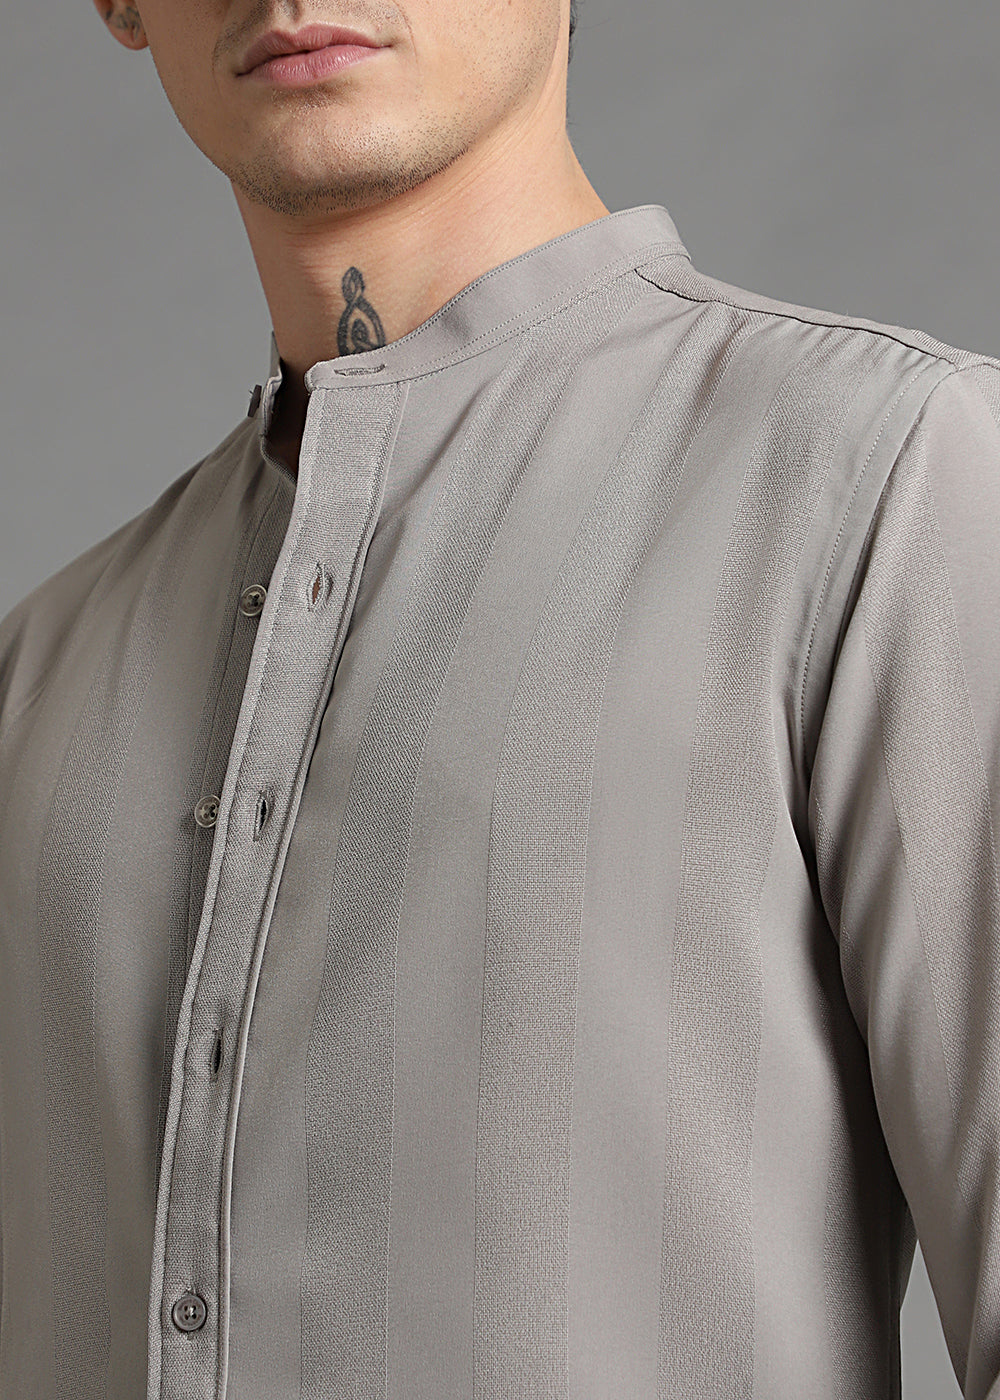 Slate Grey Shein Patterned Shirt